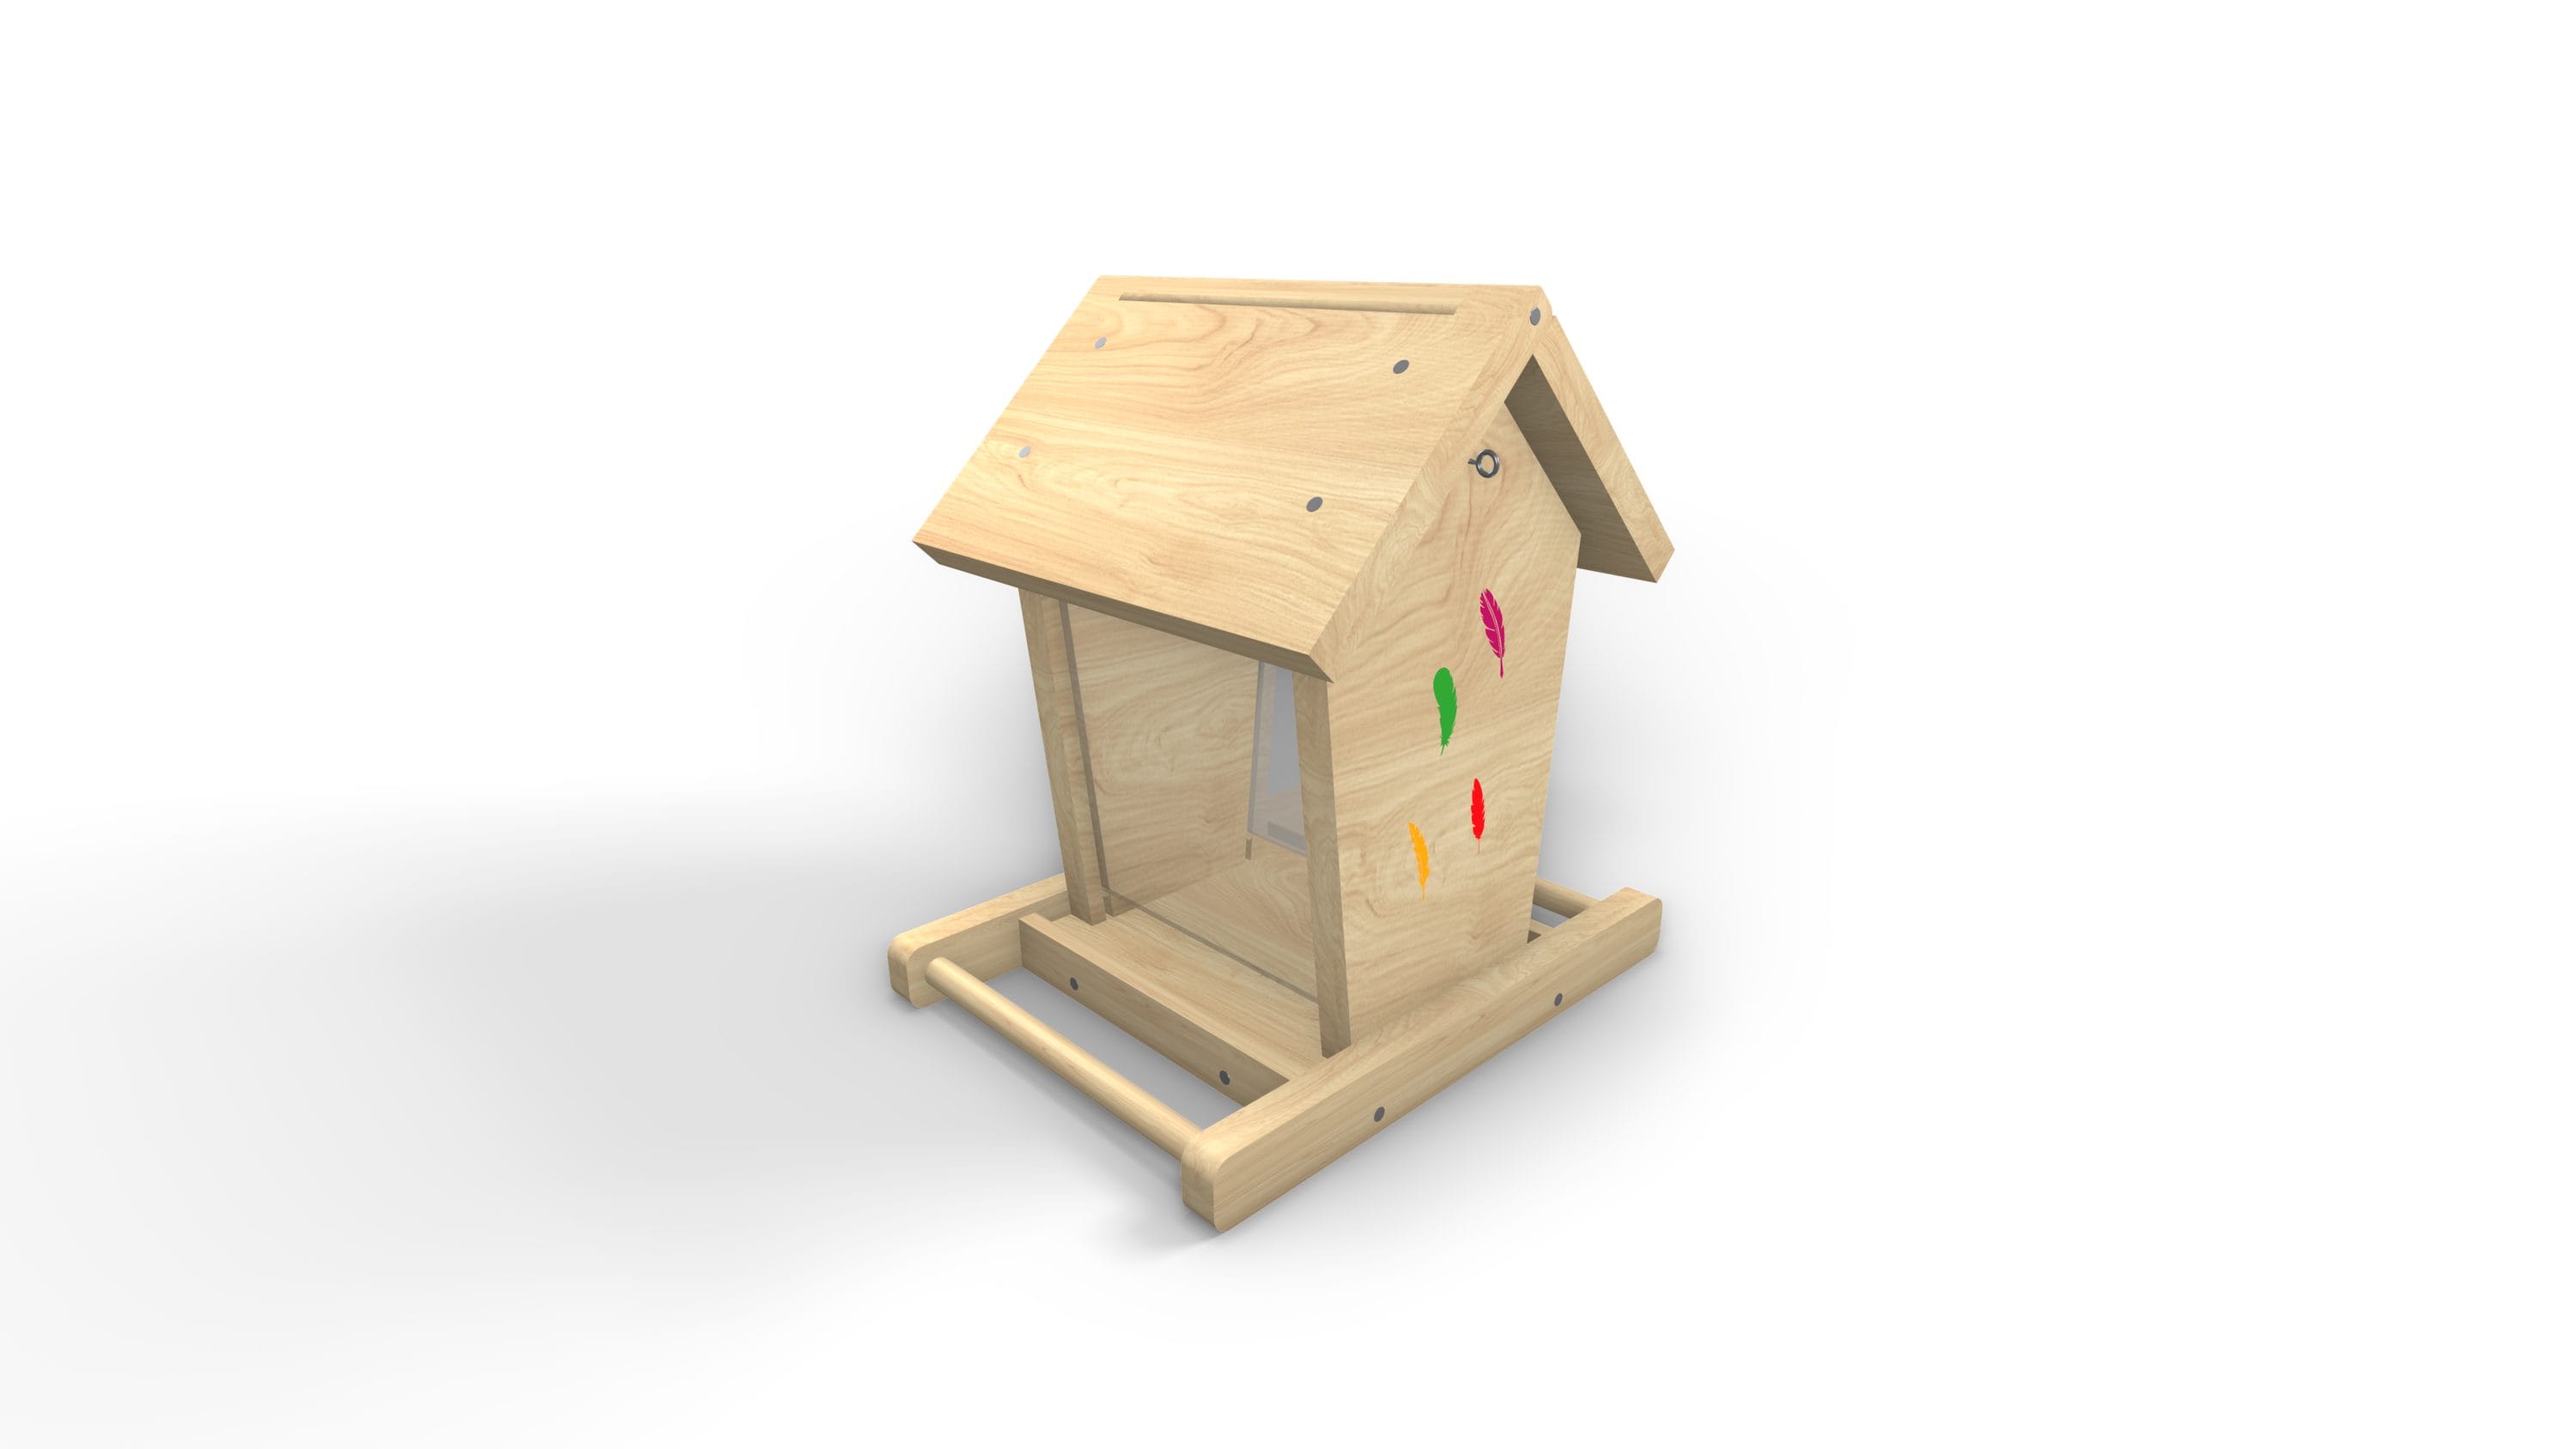 STANLEY Jr. Wooden DIY Kit - Birdhouse